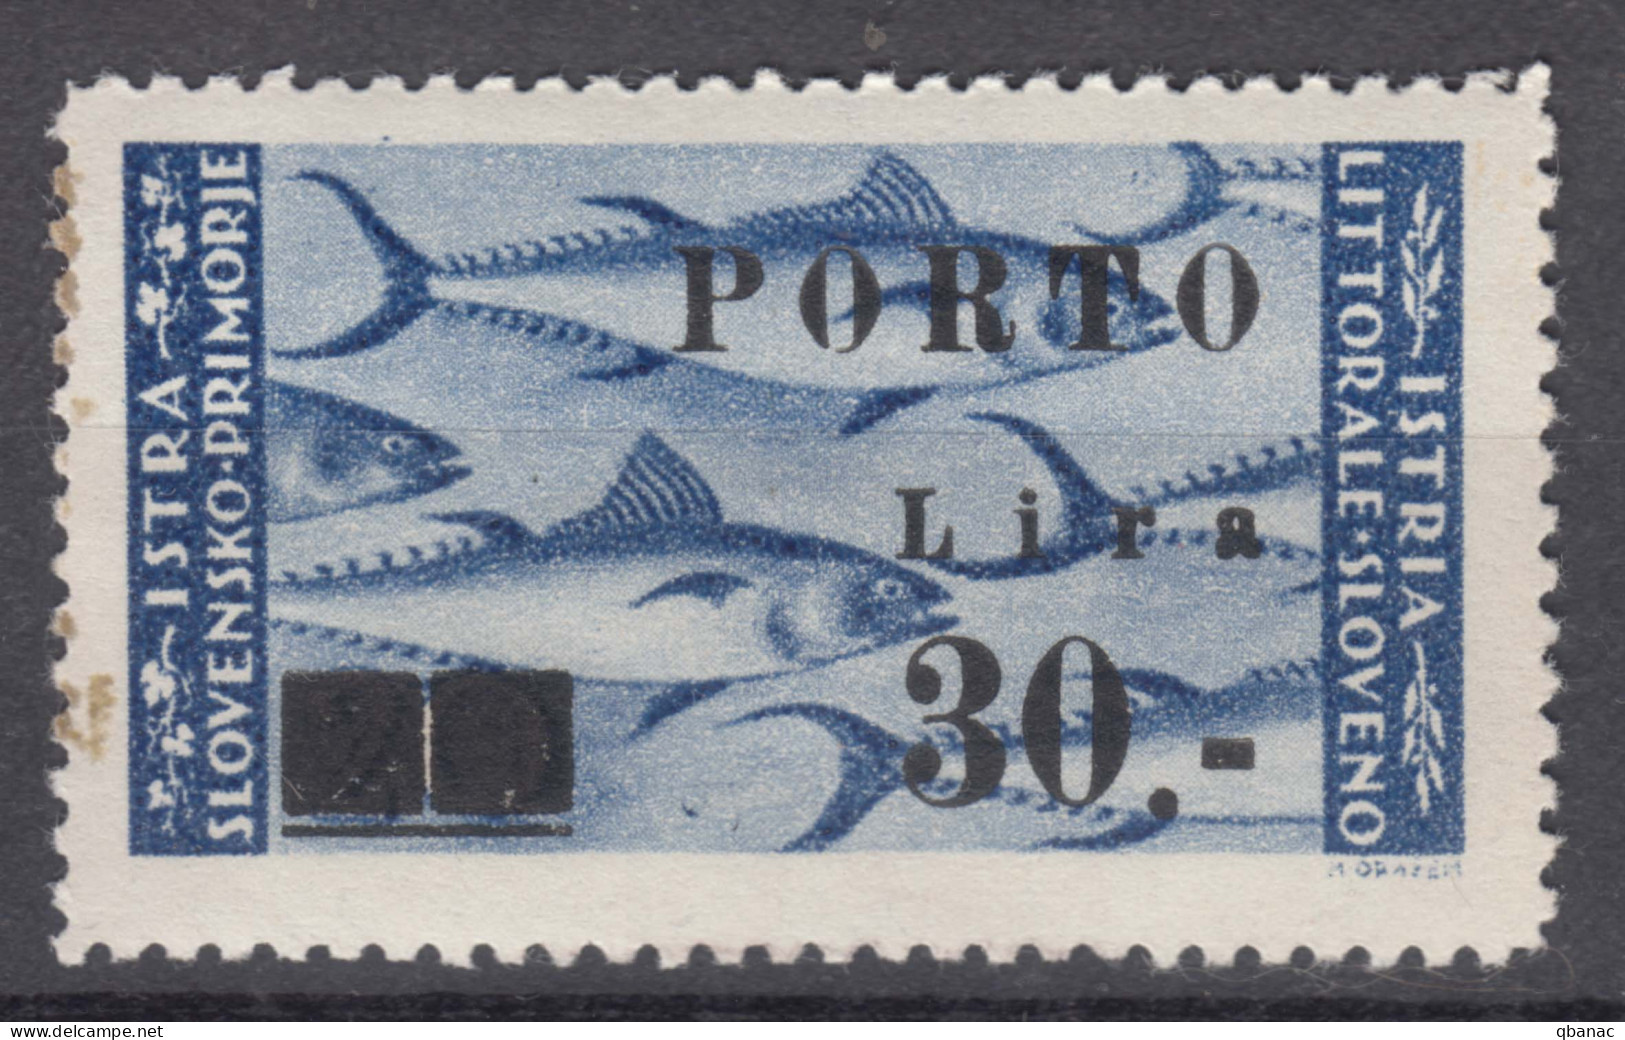 Istria Litorale Yugoslavia Occupation, Porto 1946 Sassone#19 Overprint II, Mint Never Hinged - Jugoslawische Bes.: Istrien